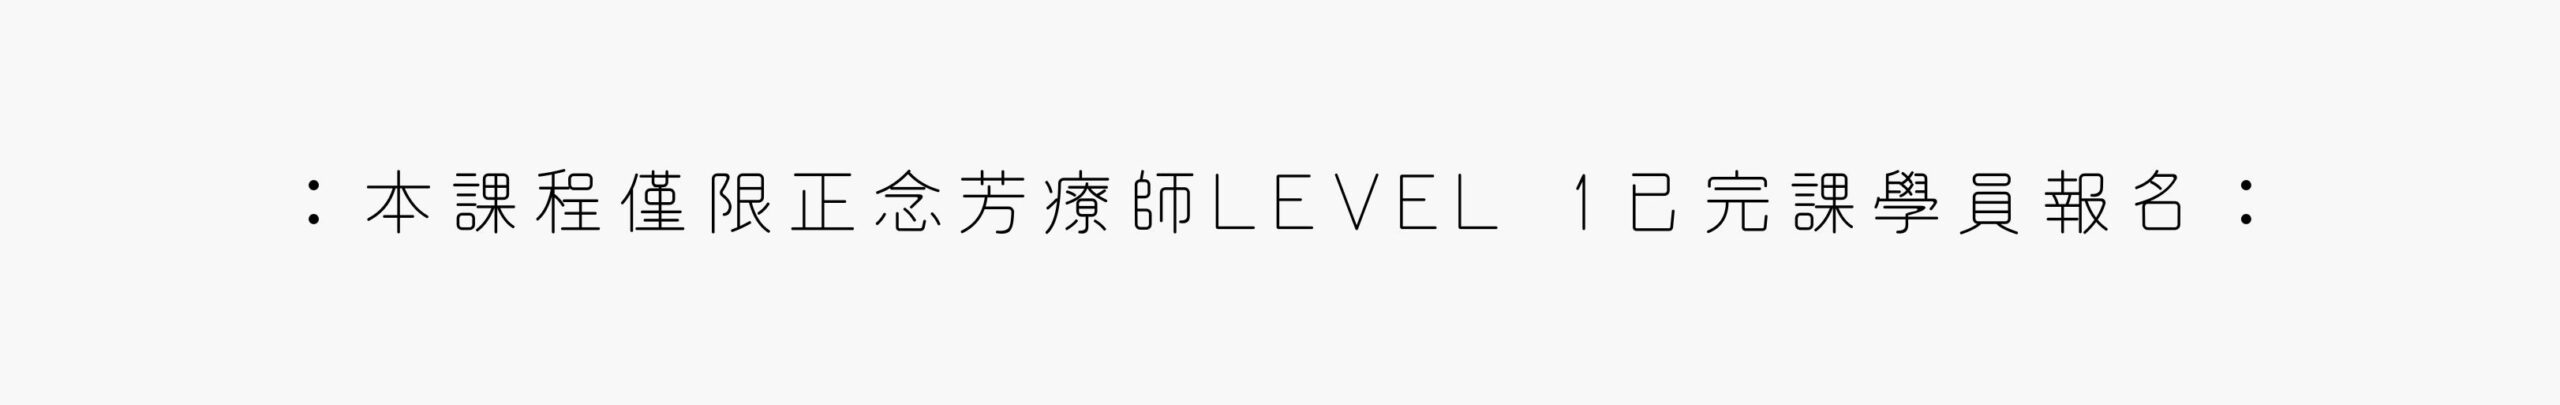 Level 2 - 13